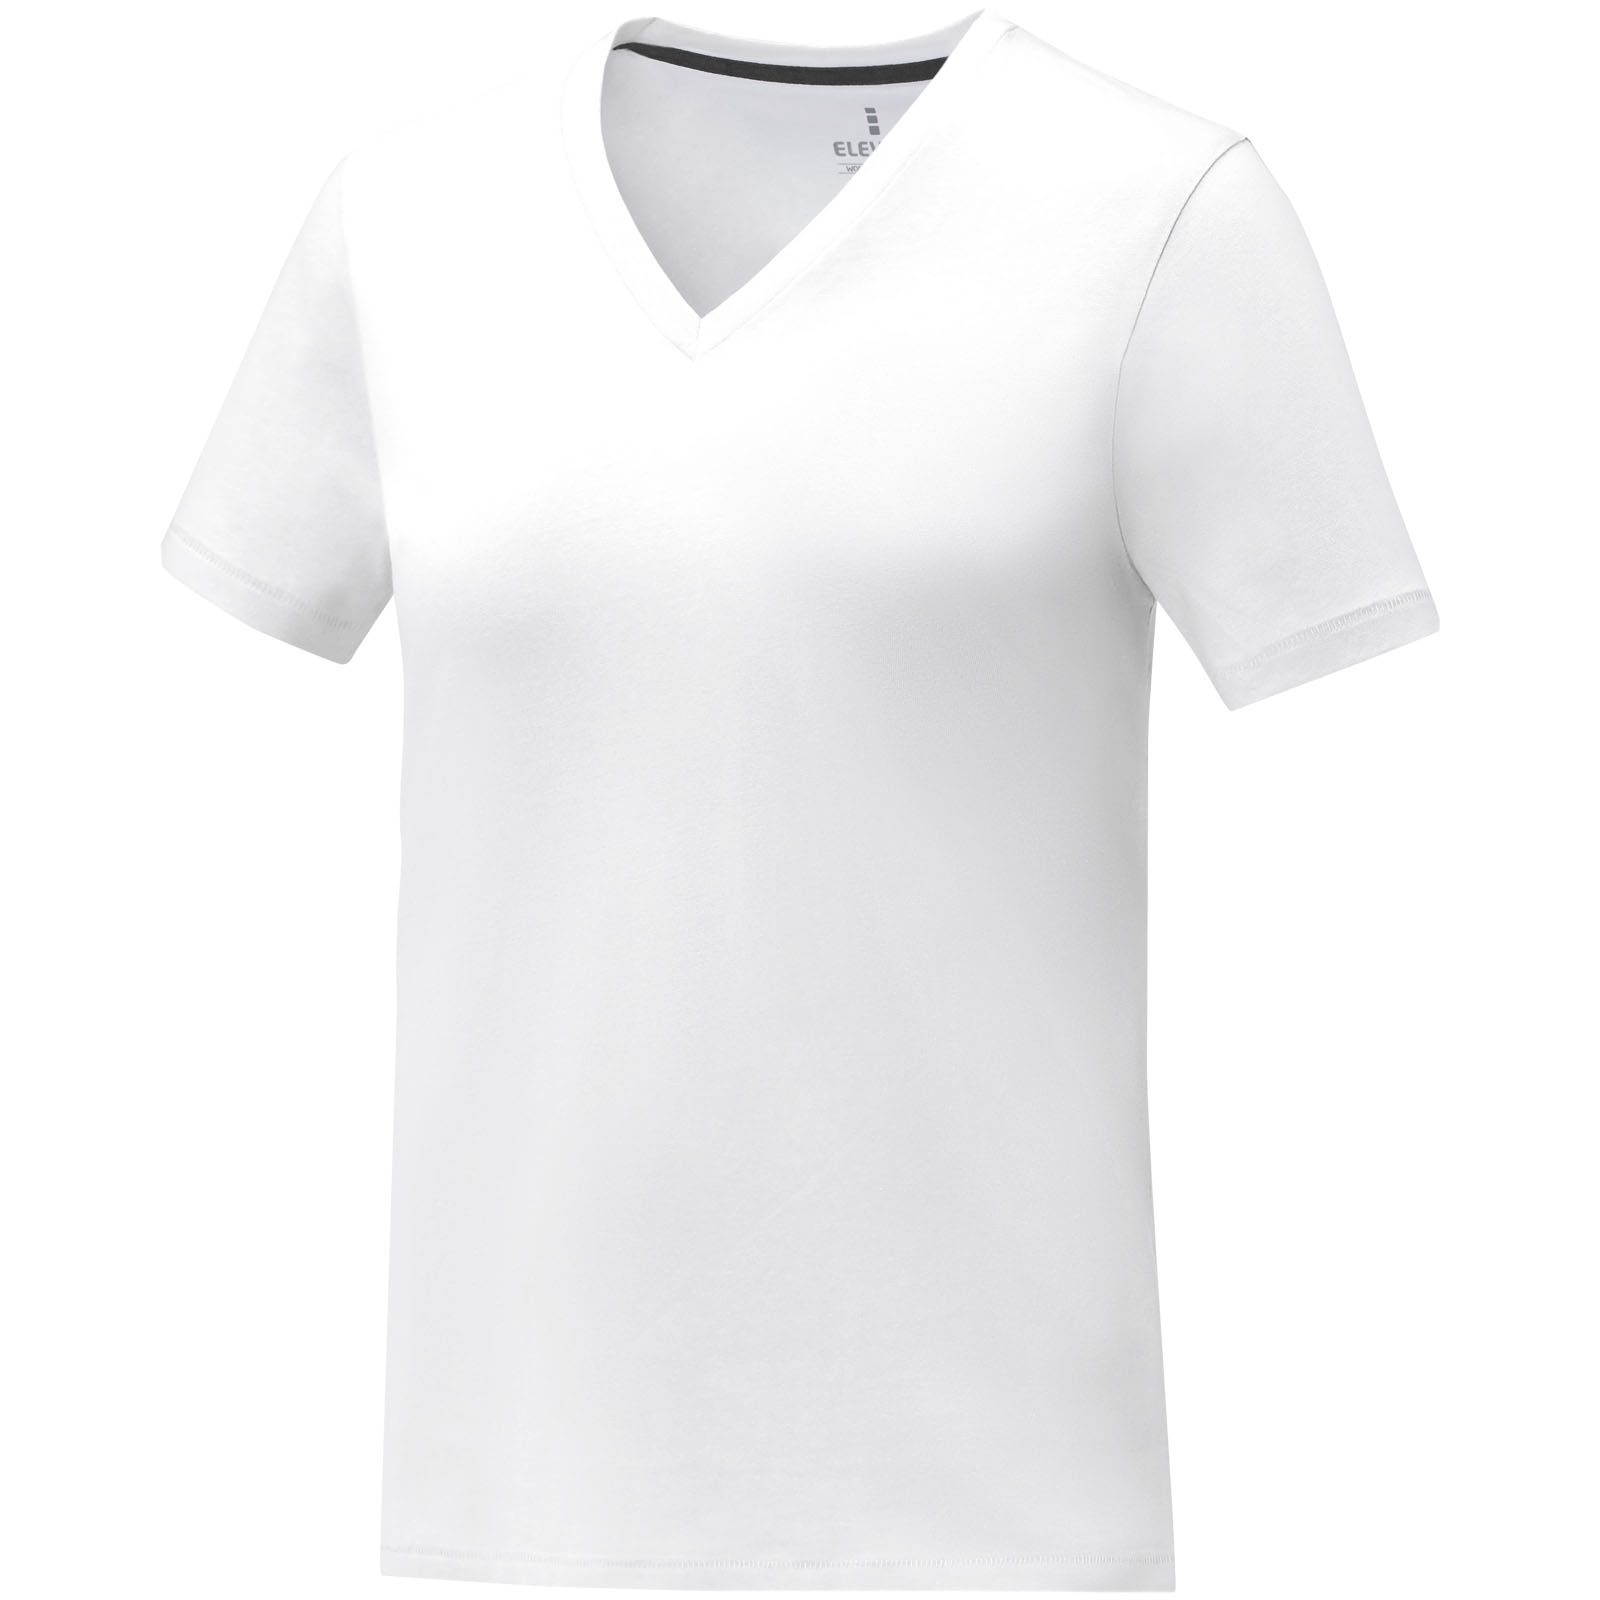 Advertising T-shirts - Somoto short sleeve women's V-neck t-shirt 